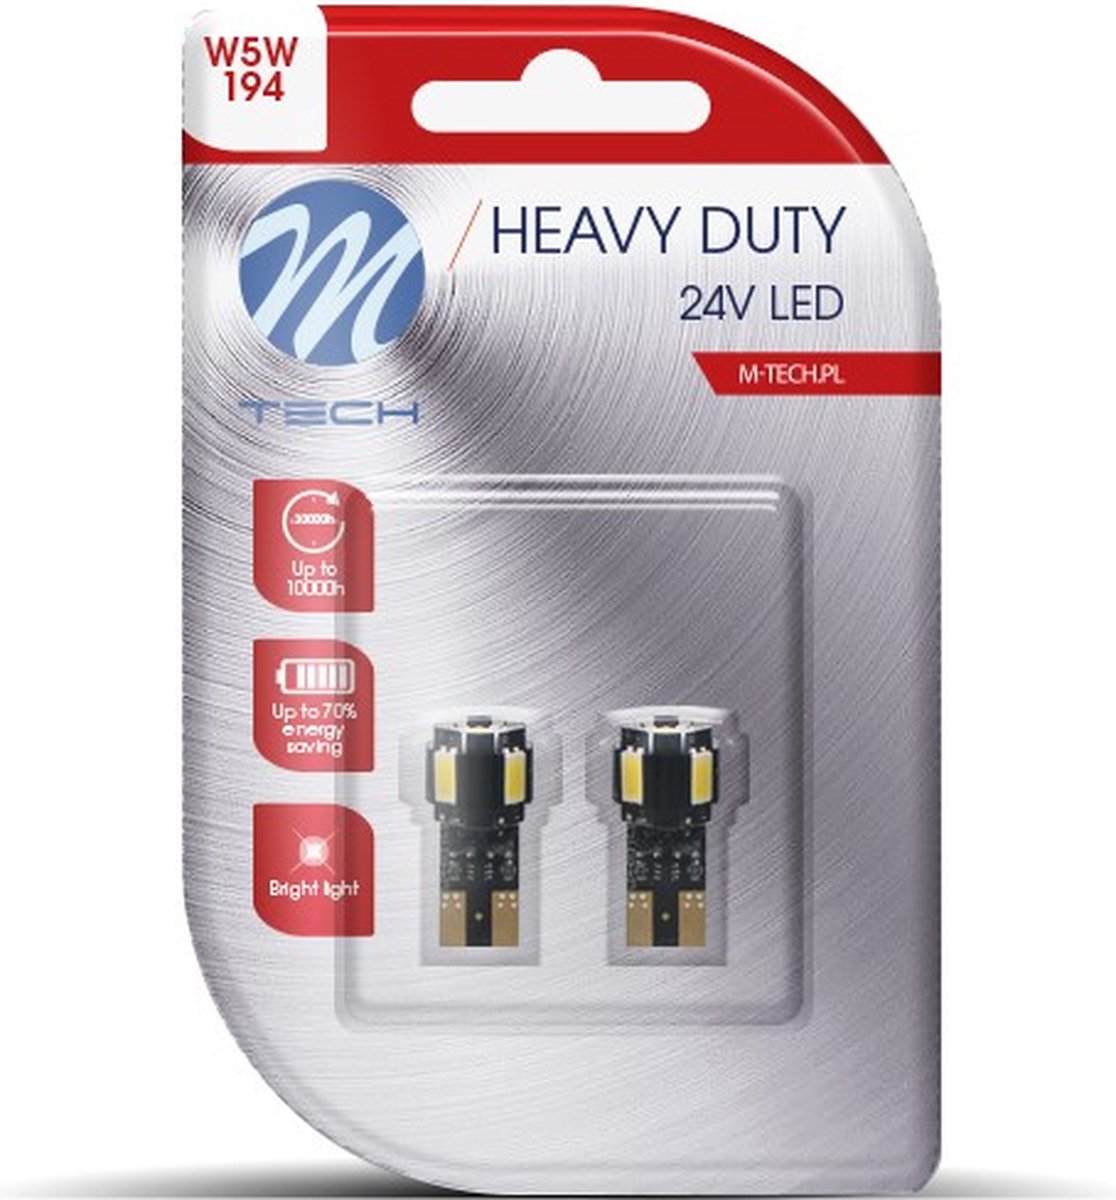 M-Tech LED W5W 24V - Heavy Duty - 4x Led diode - Wit - Set - Geschikt voor 24V voertuigen